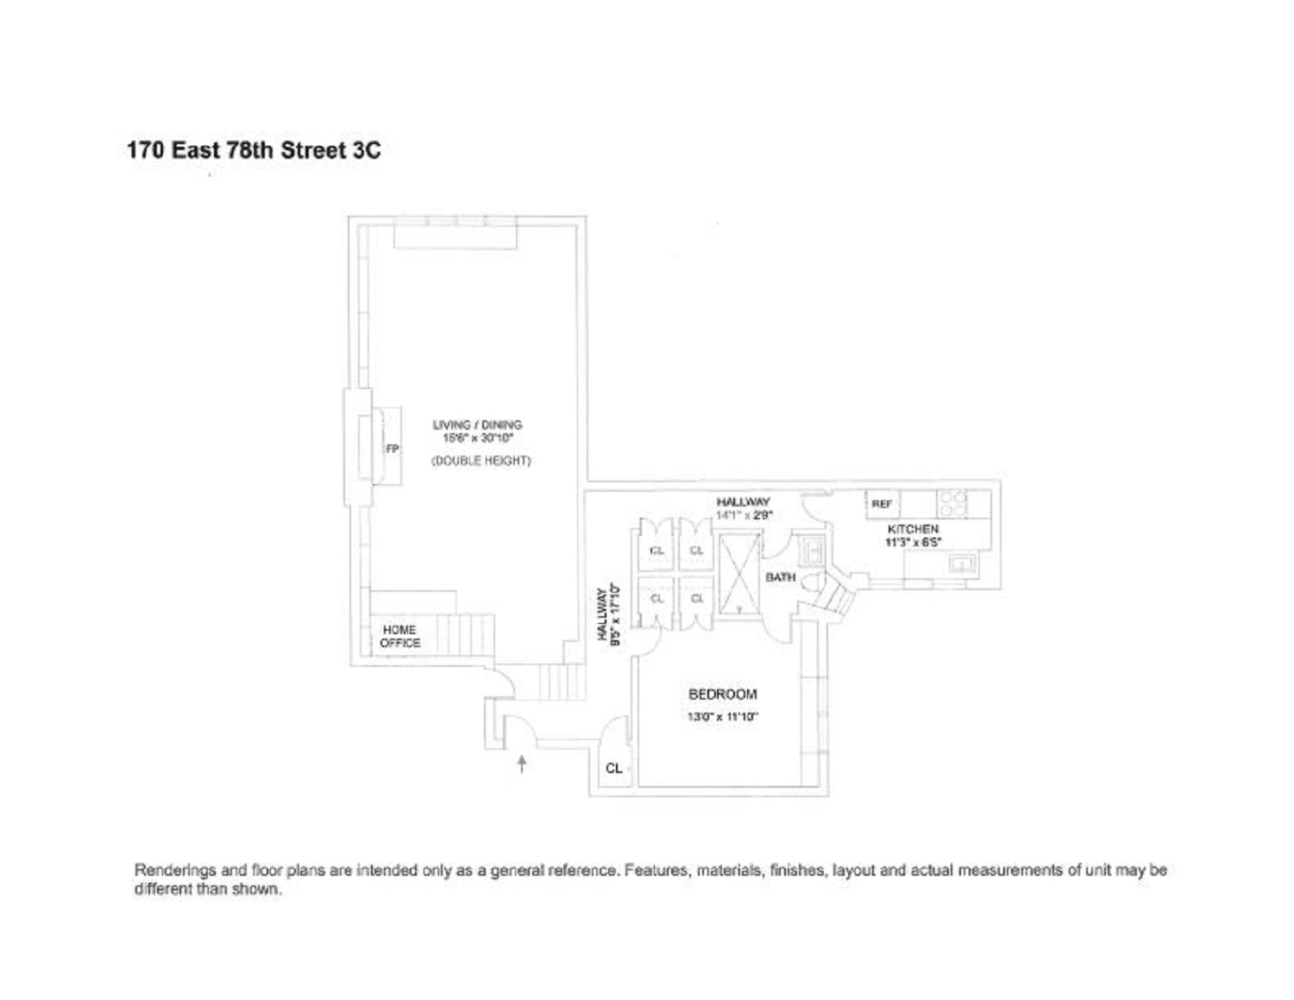 Floorplan for 170 East 78th Street, 3C